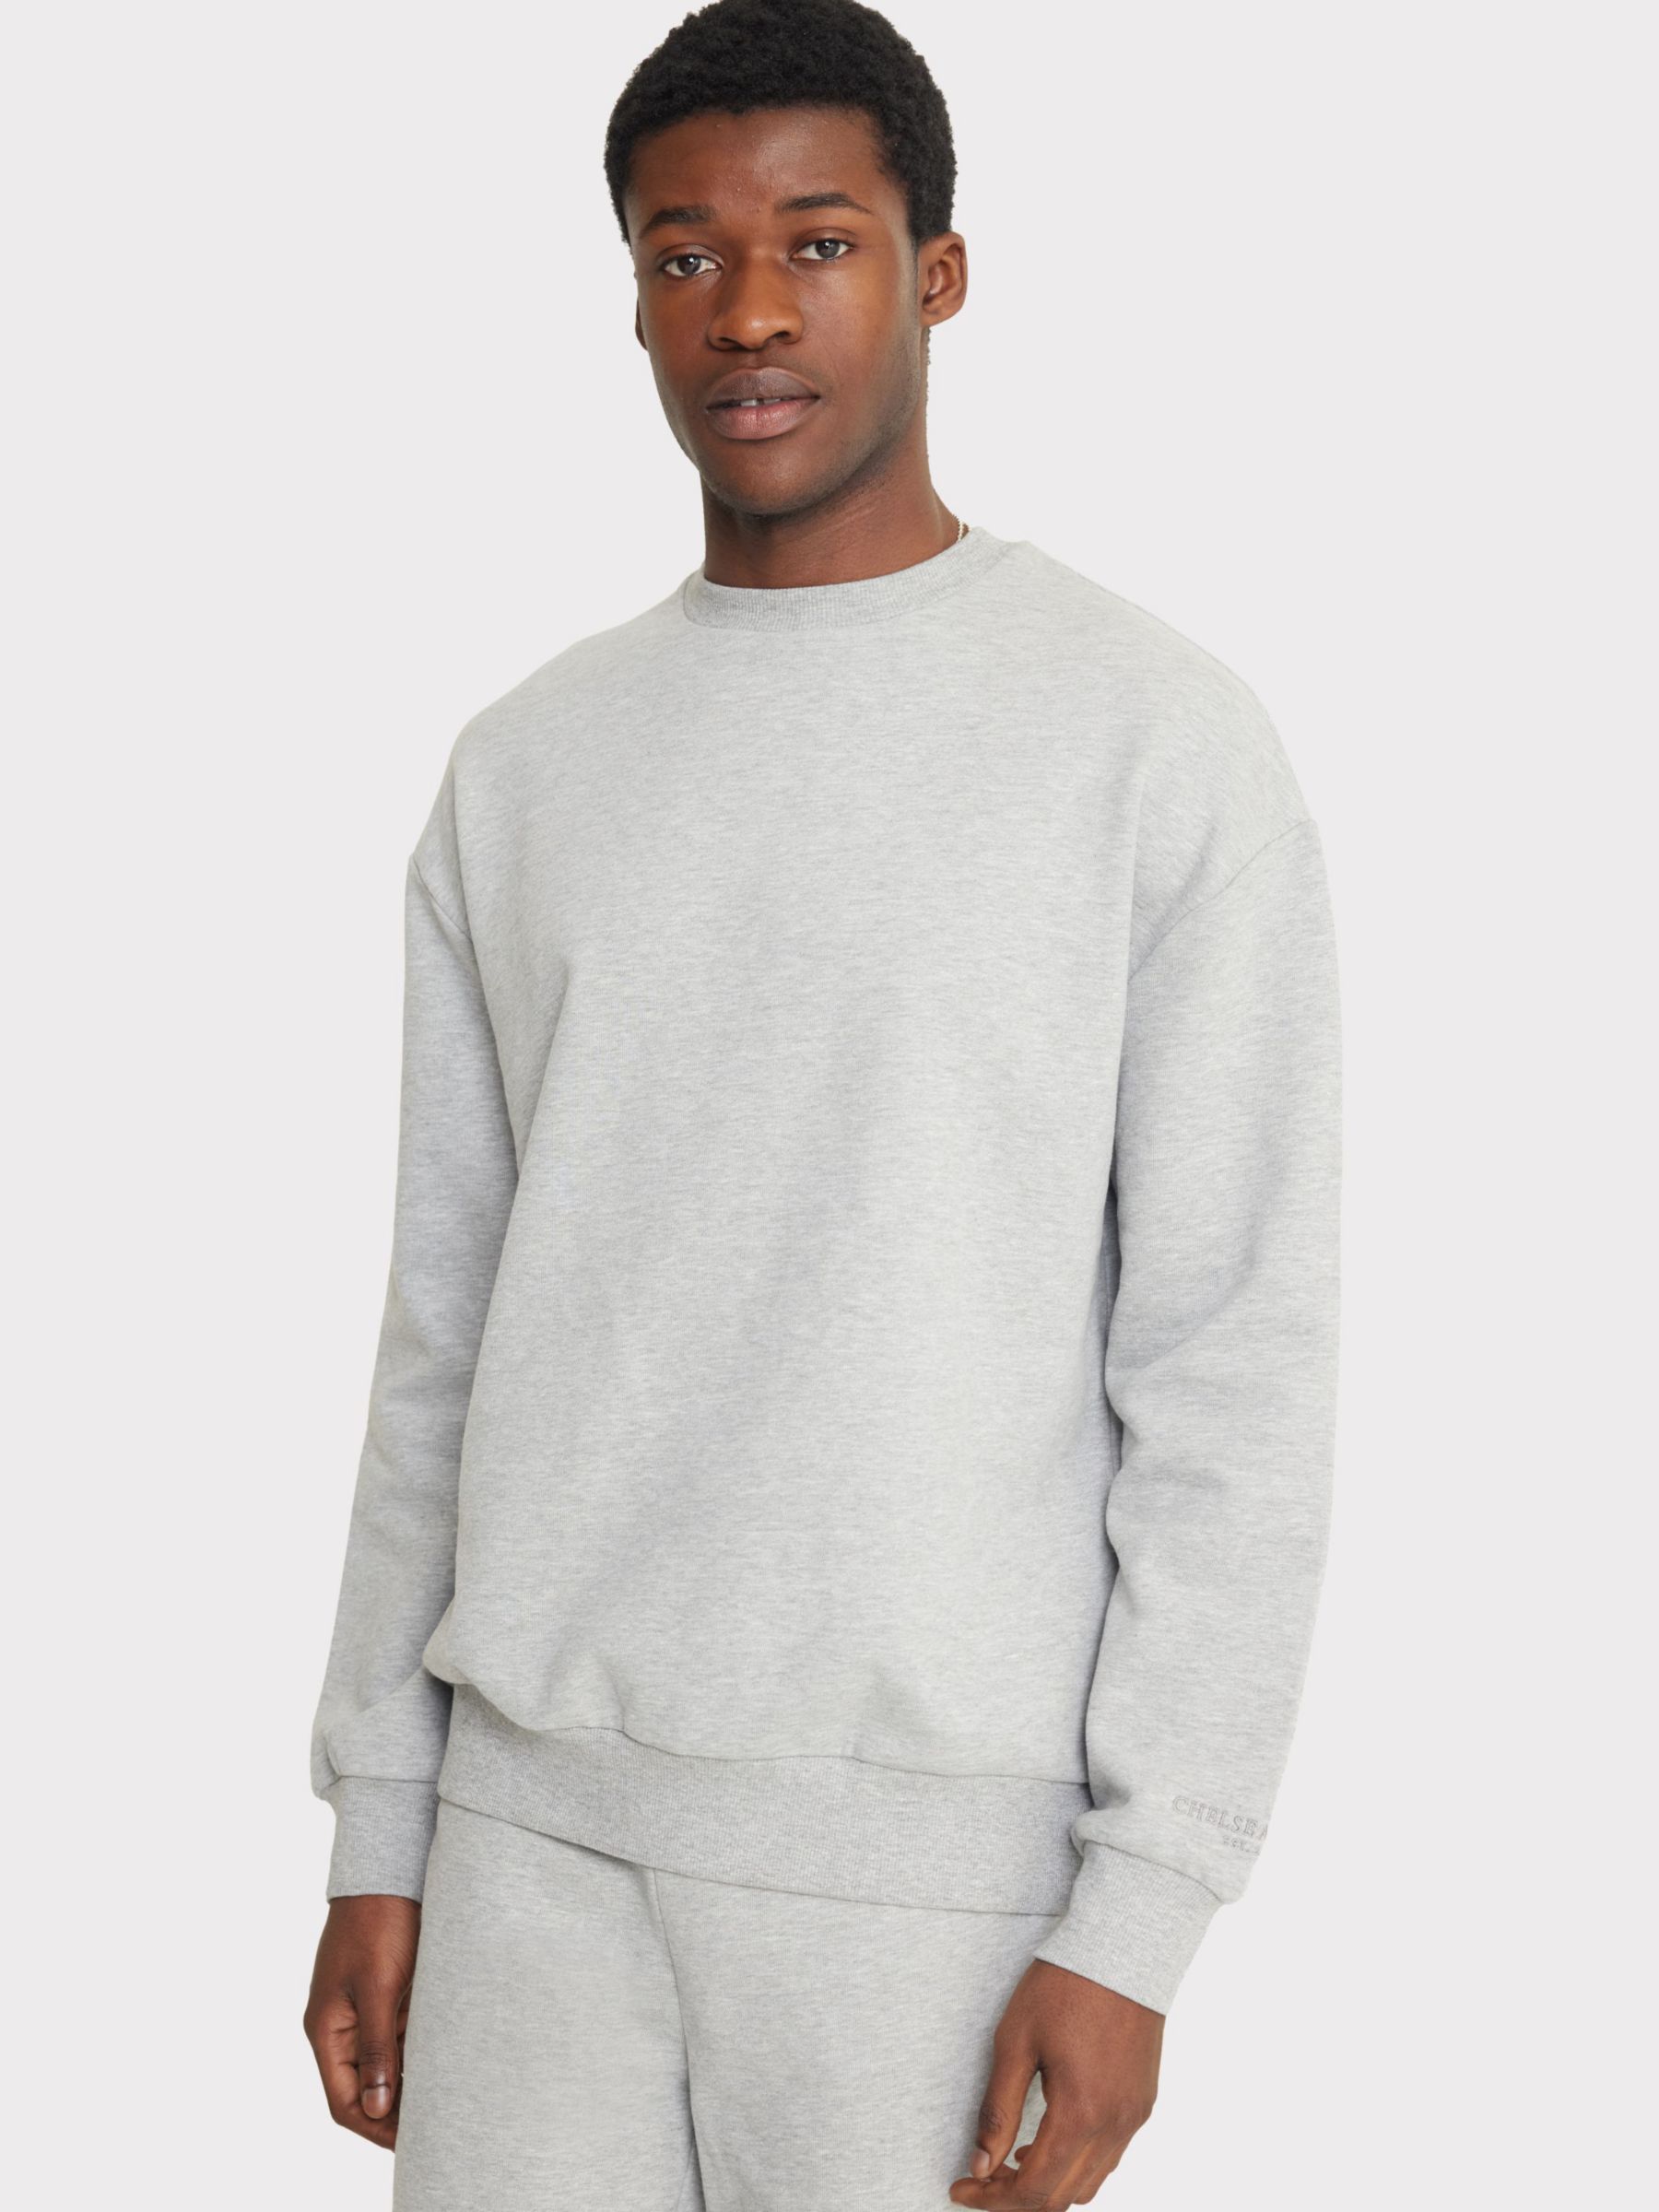 Chelsea Peers Organic Cotton Blend Sweatshirt, Grey, L